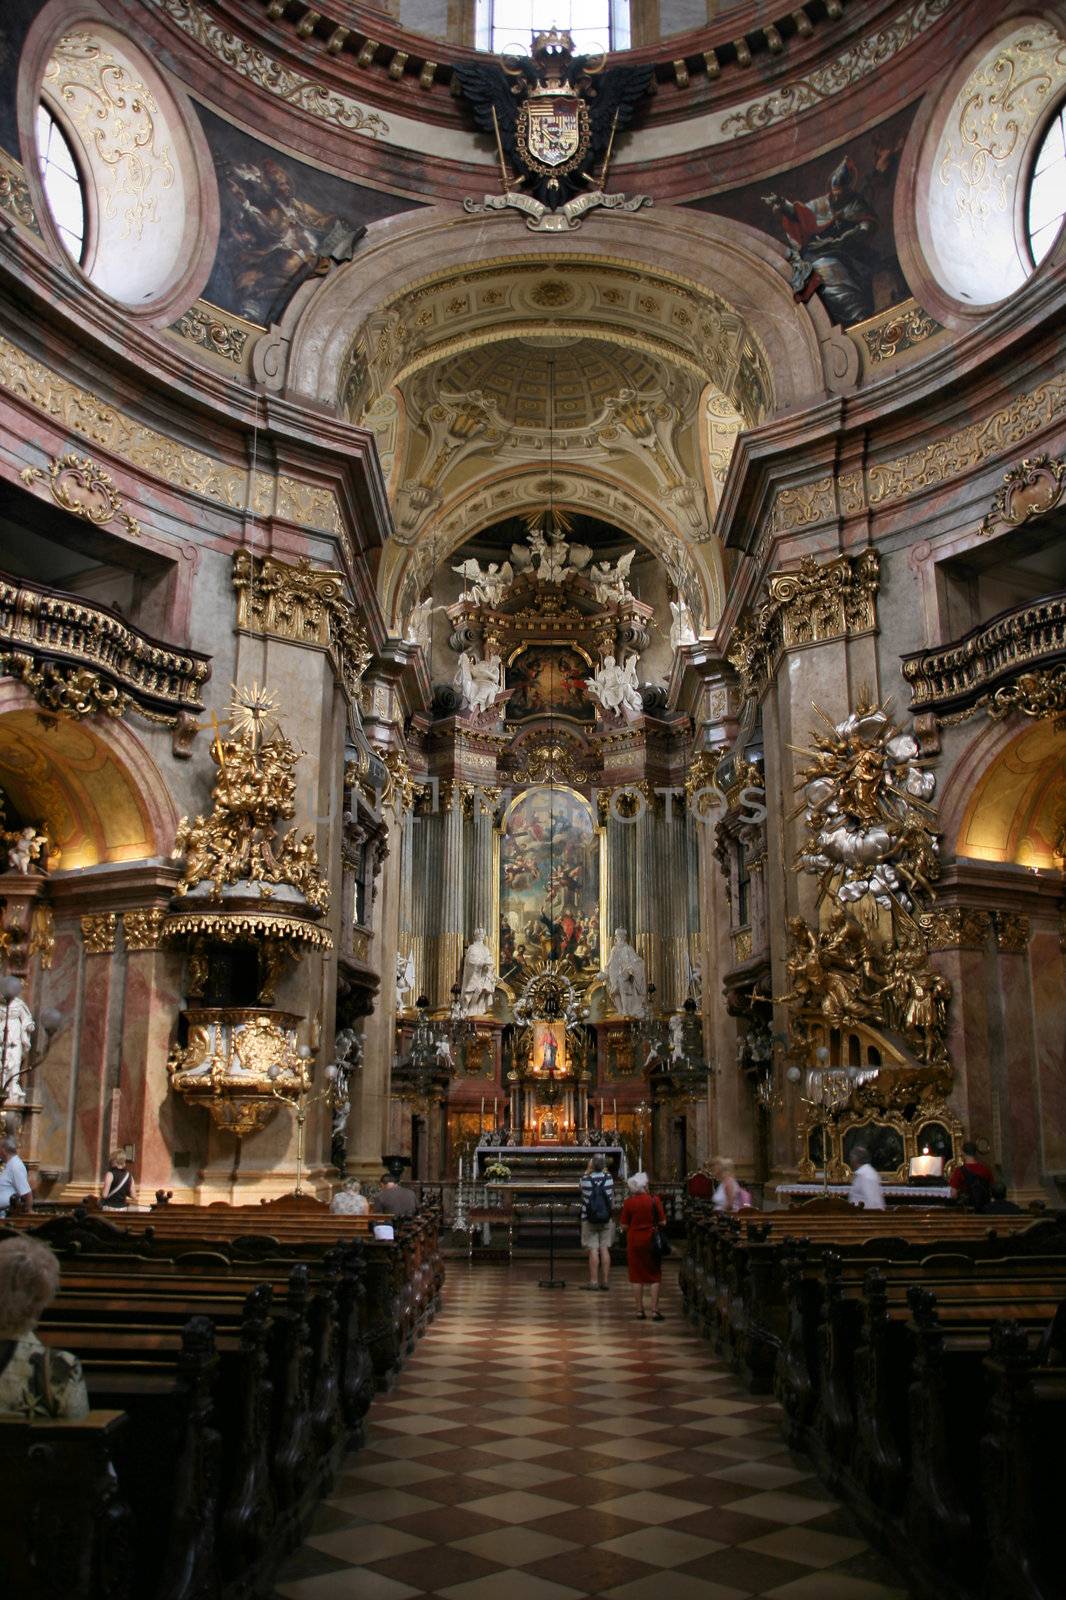 Baroque interior by tupungato